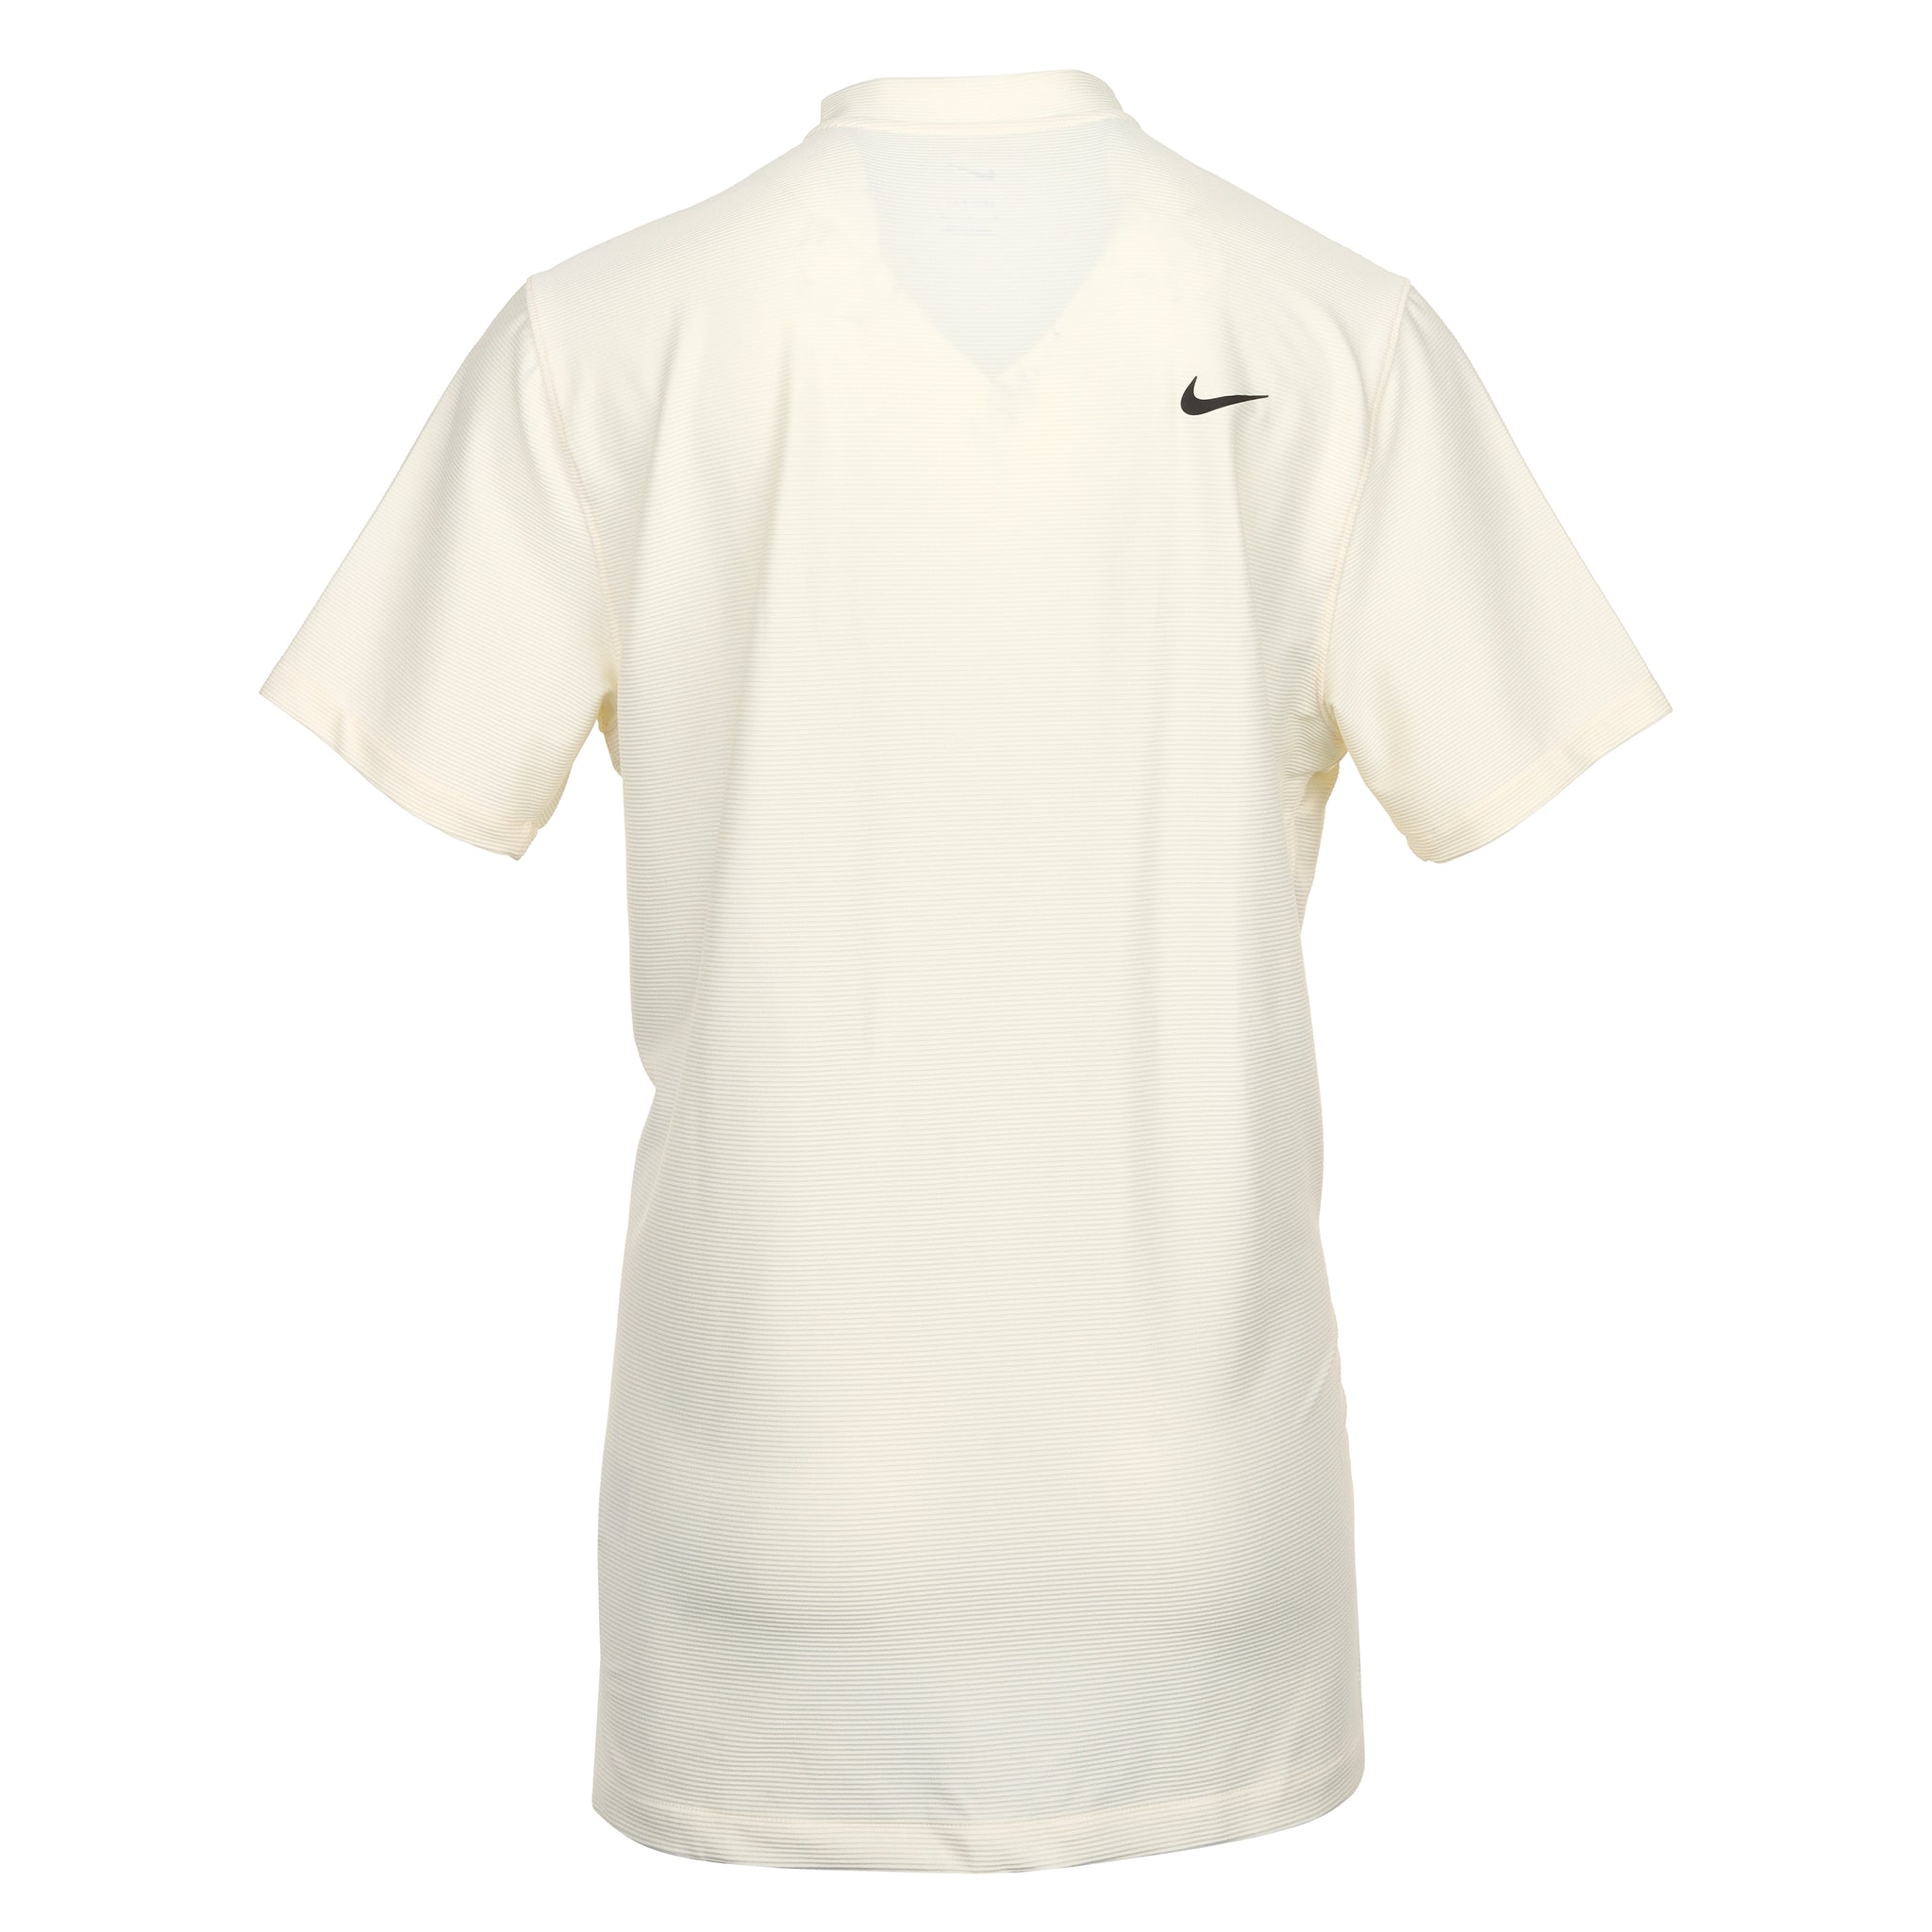 nike-golf-dri-fit-tour-texture-shirt-fj7035-113-cocnut-milk